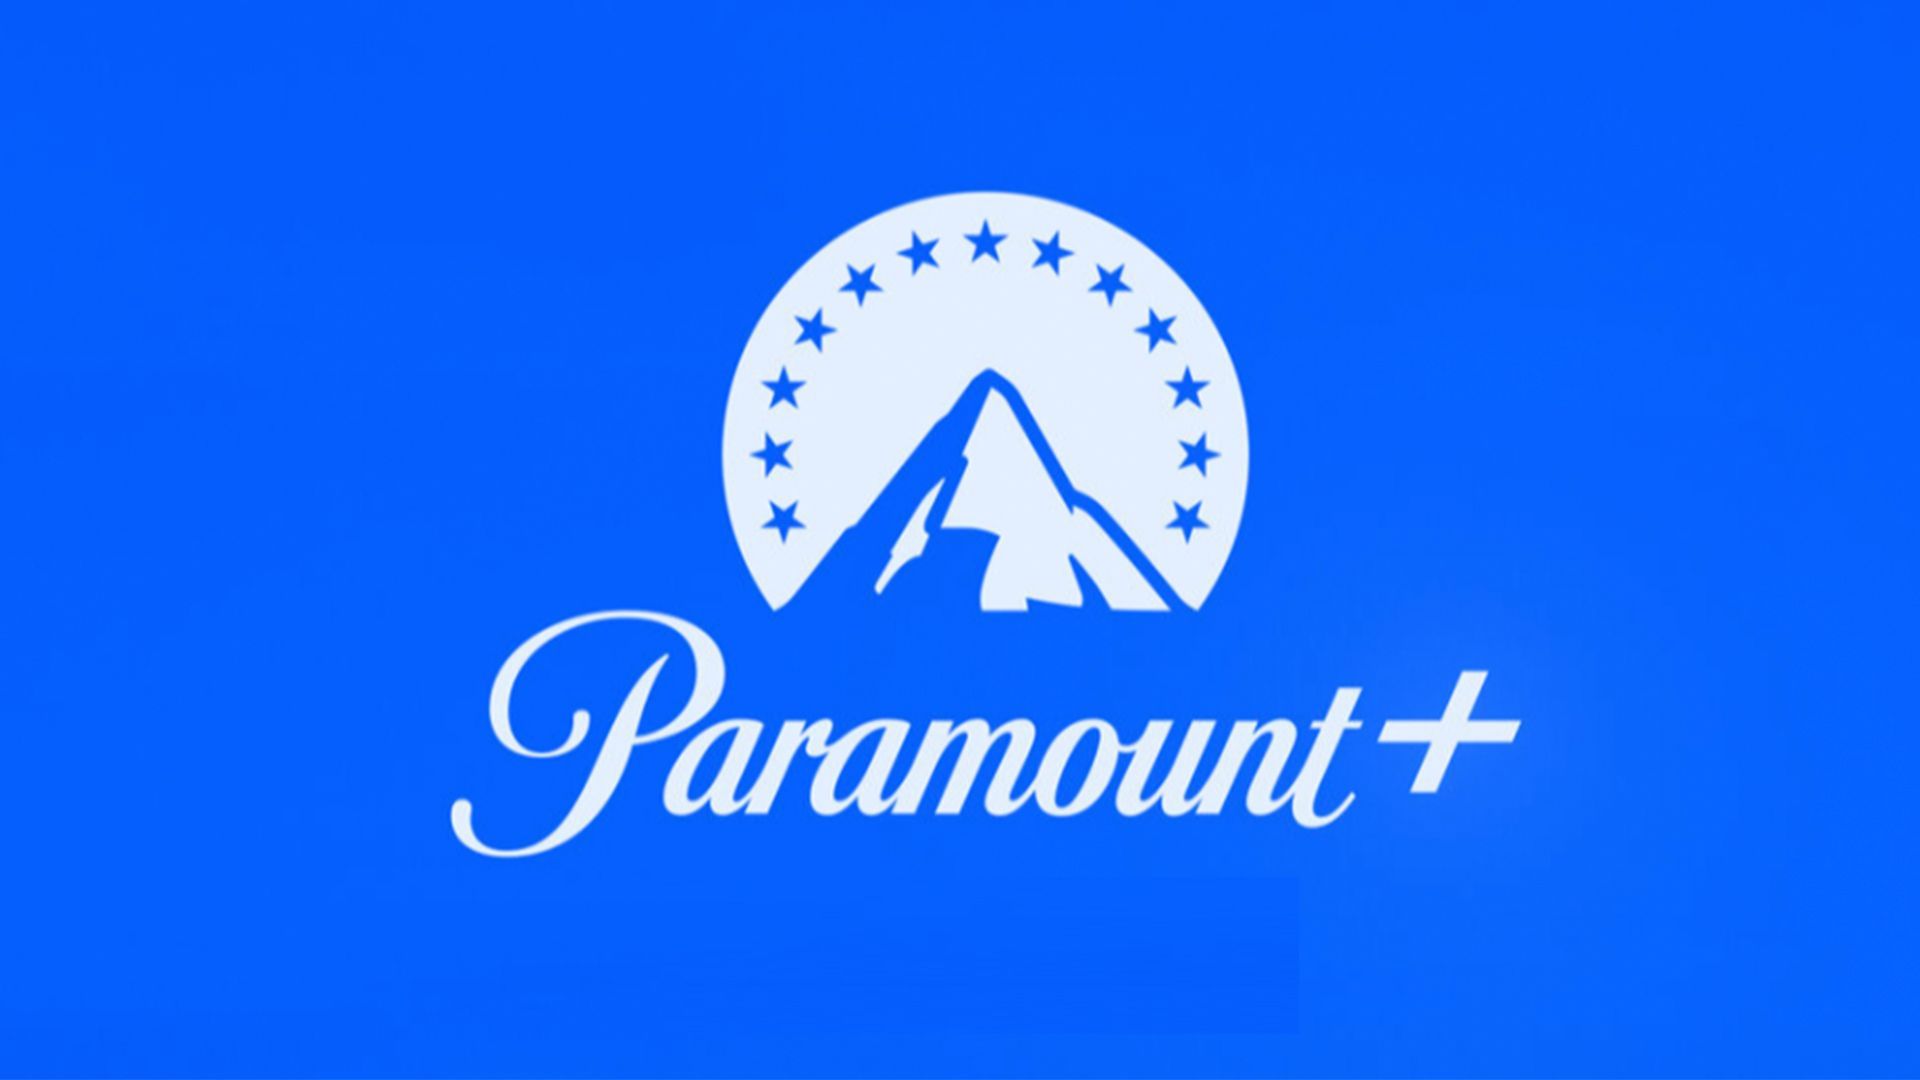 „Paramount+“